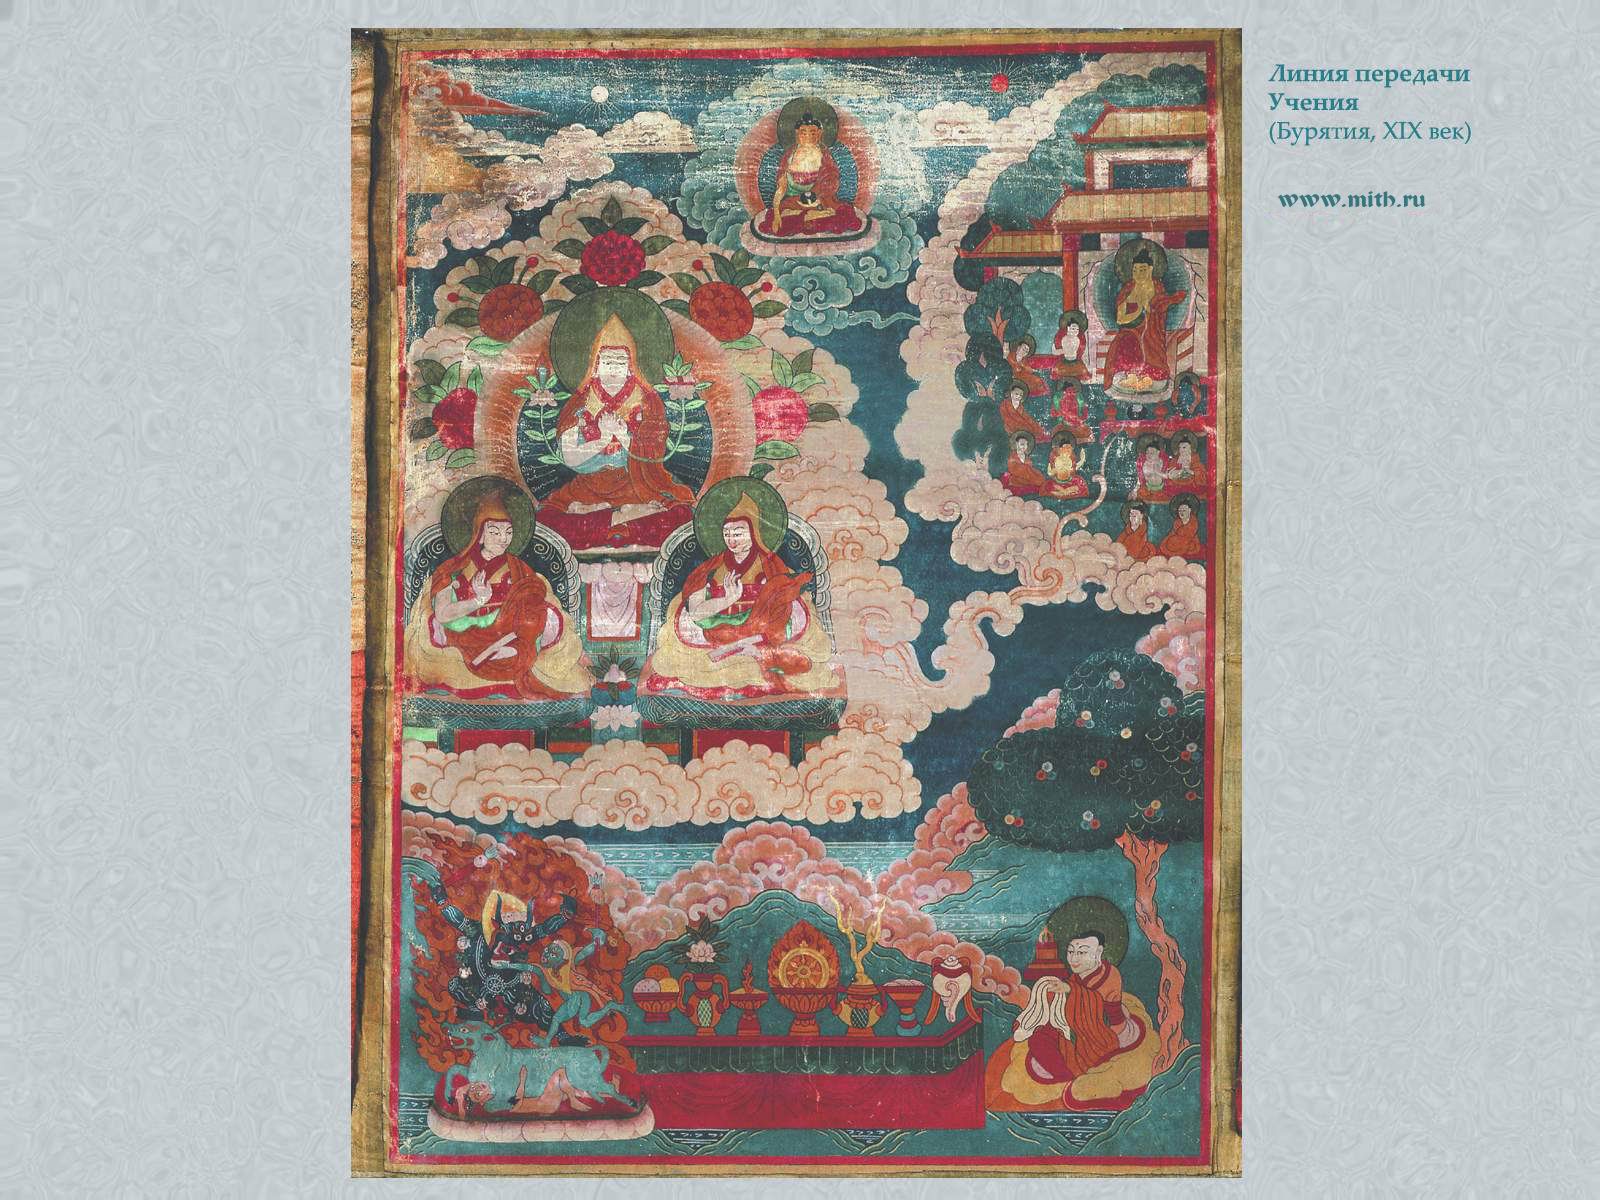 Цзонхава,
Майтрейя, Яма и Ями

перейти к книге 'Тибетская живопись'